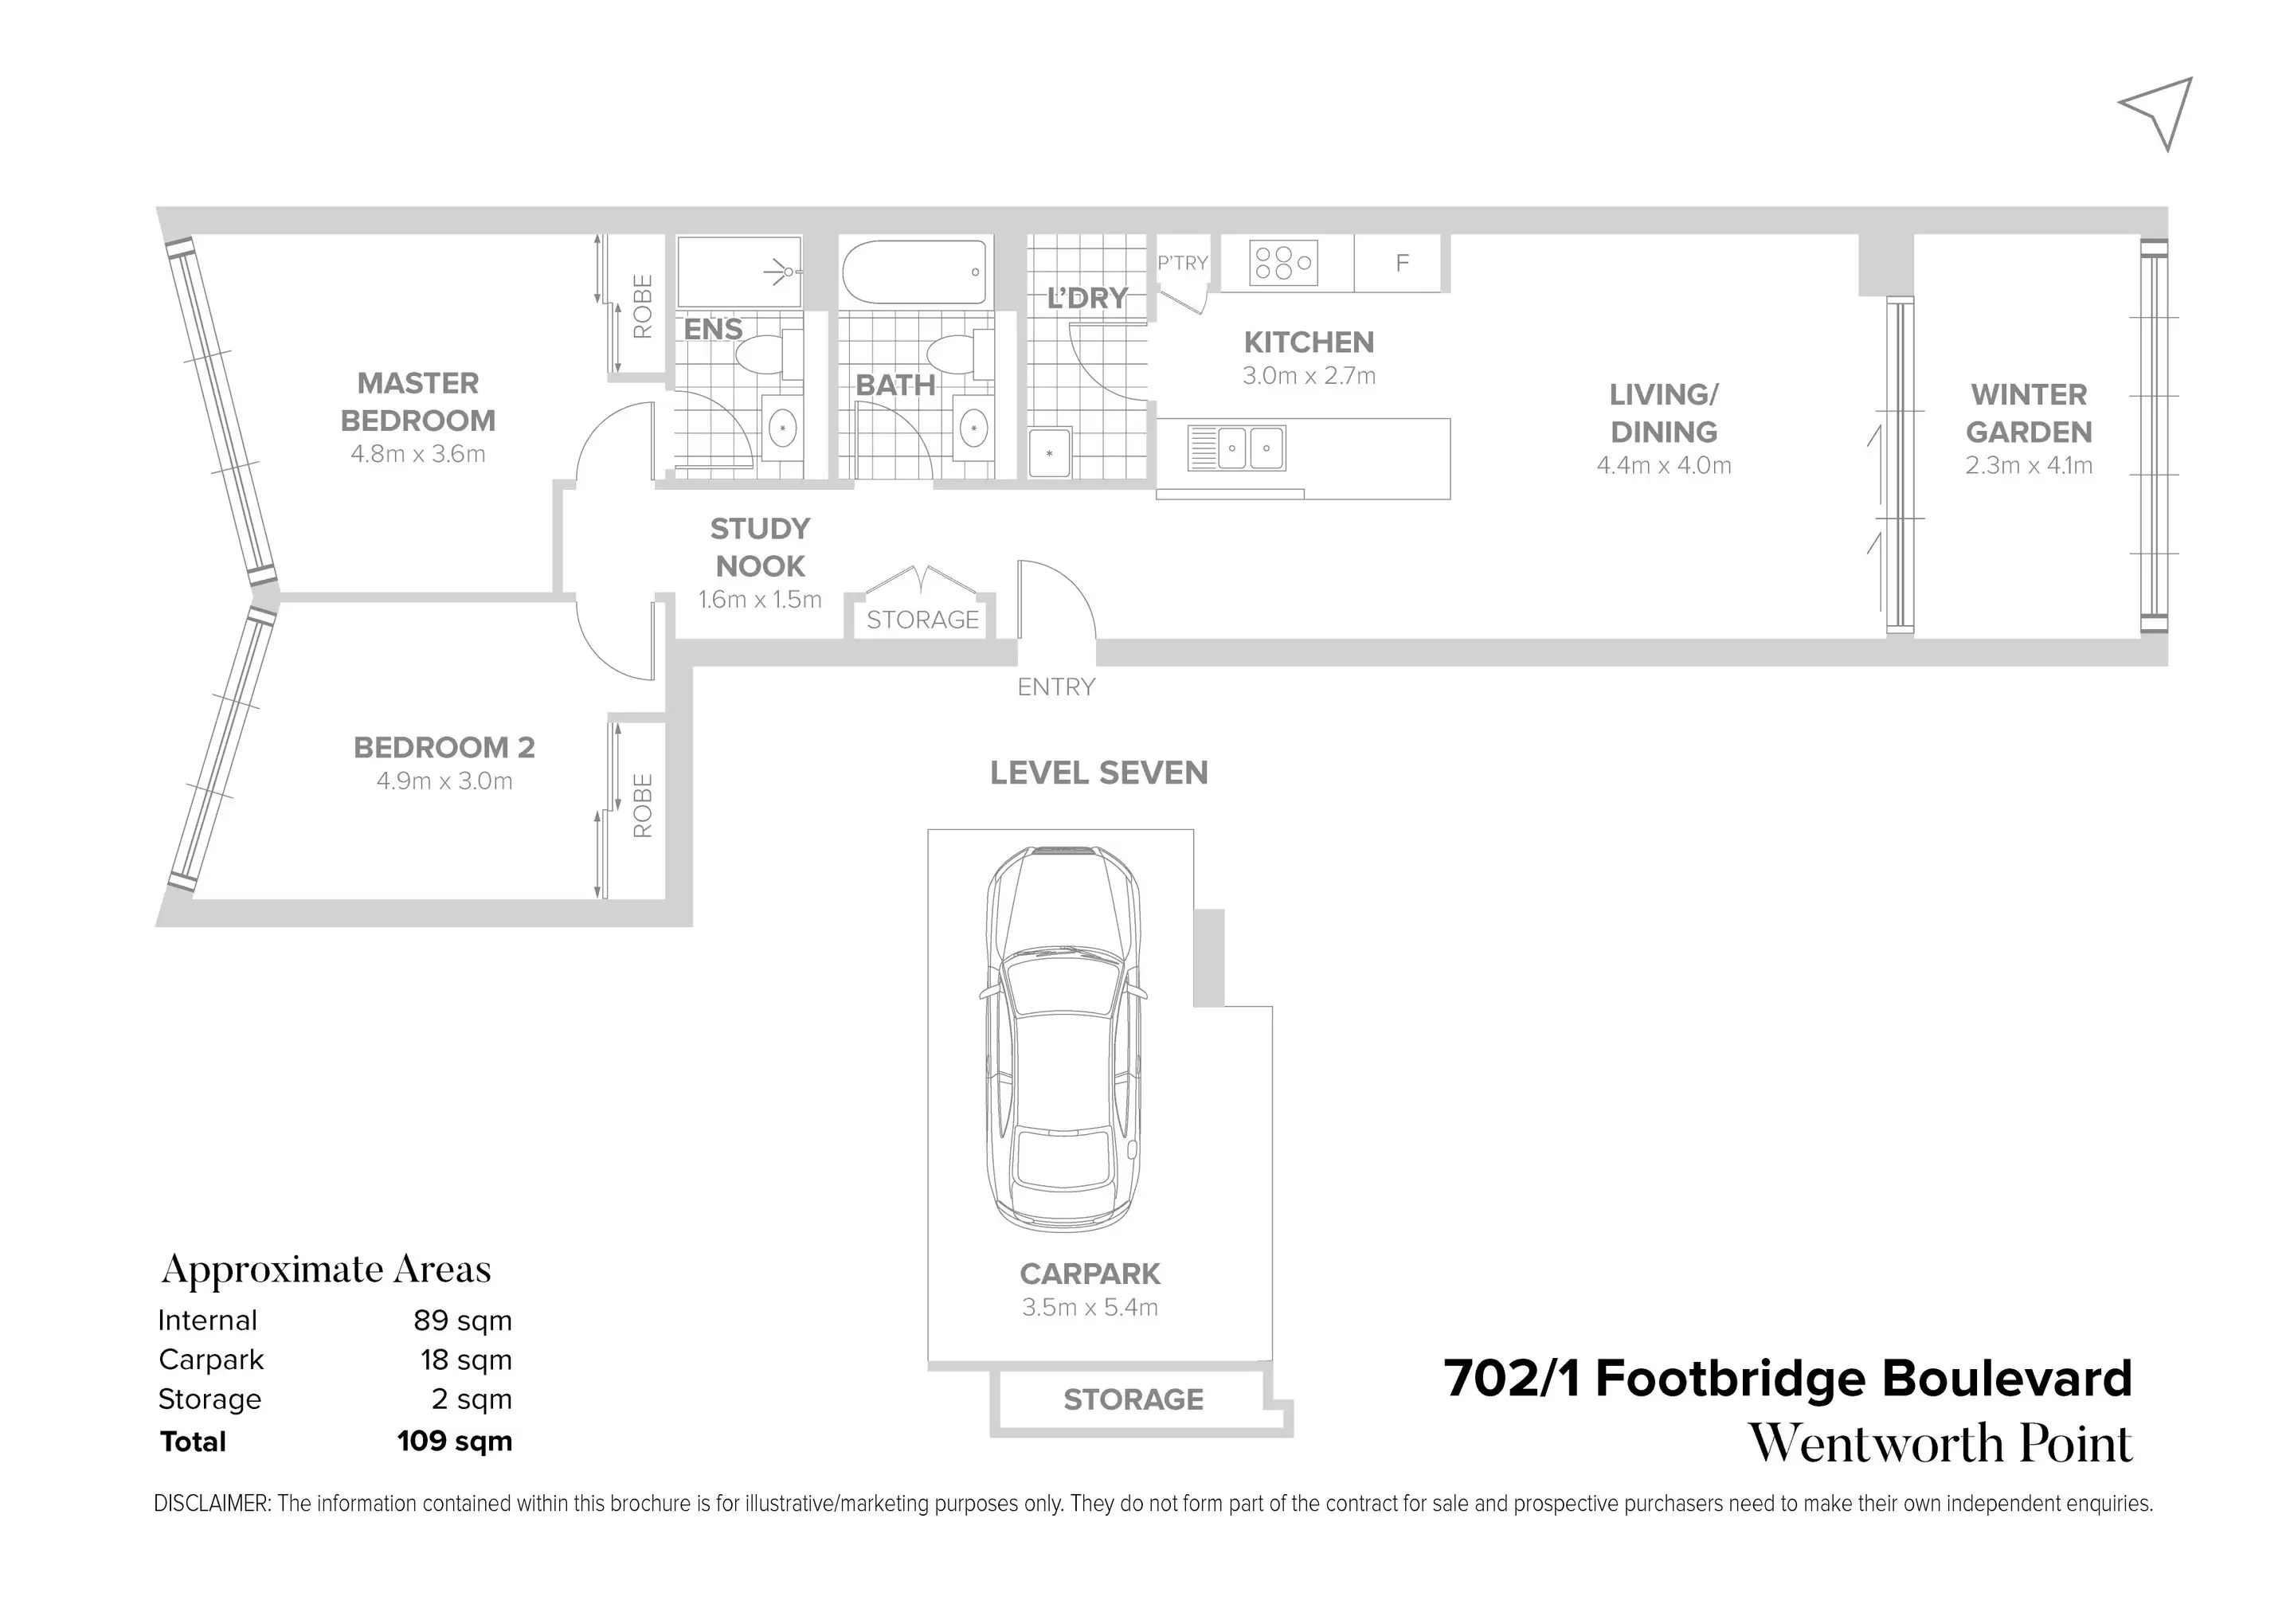 702/1 Footbridge Boulevard, Wentworth Point Sold by Chidiac Realty - floorplan